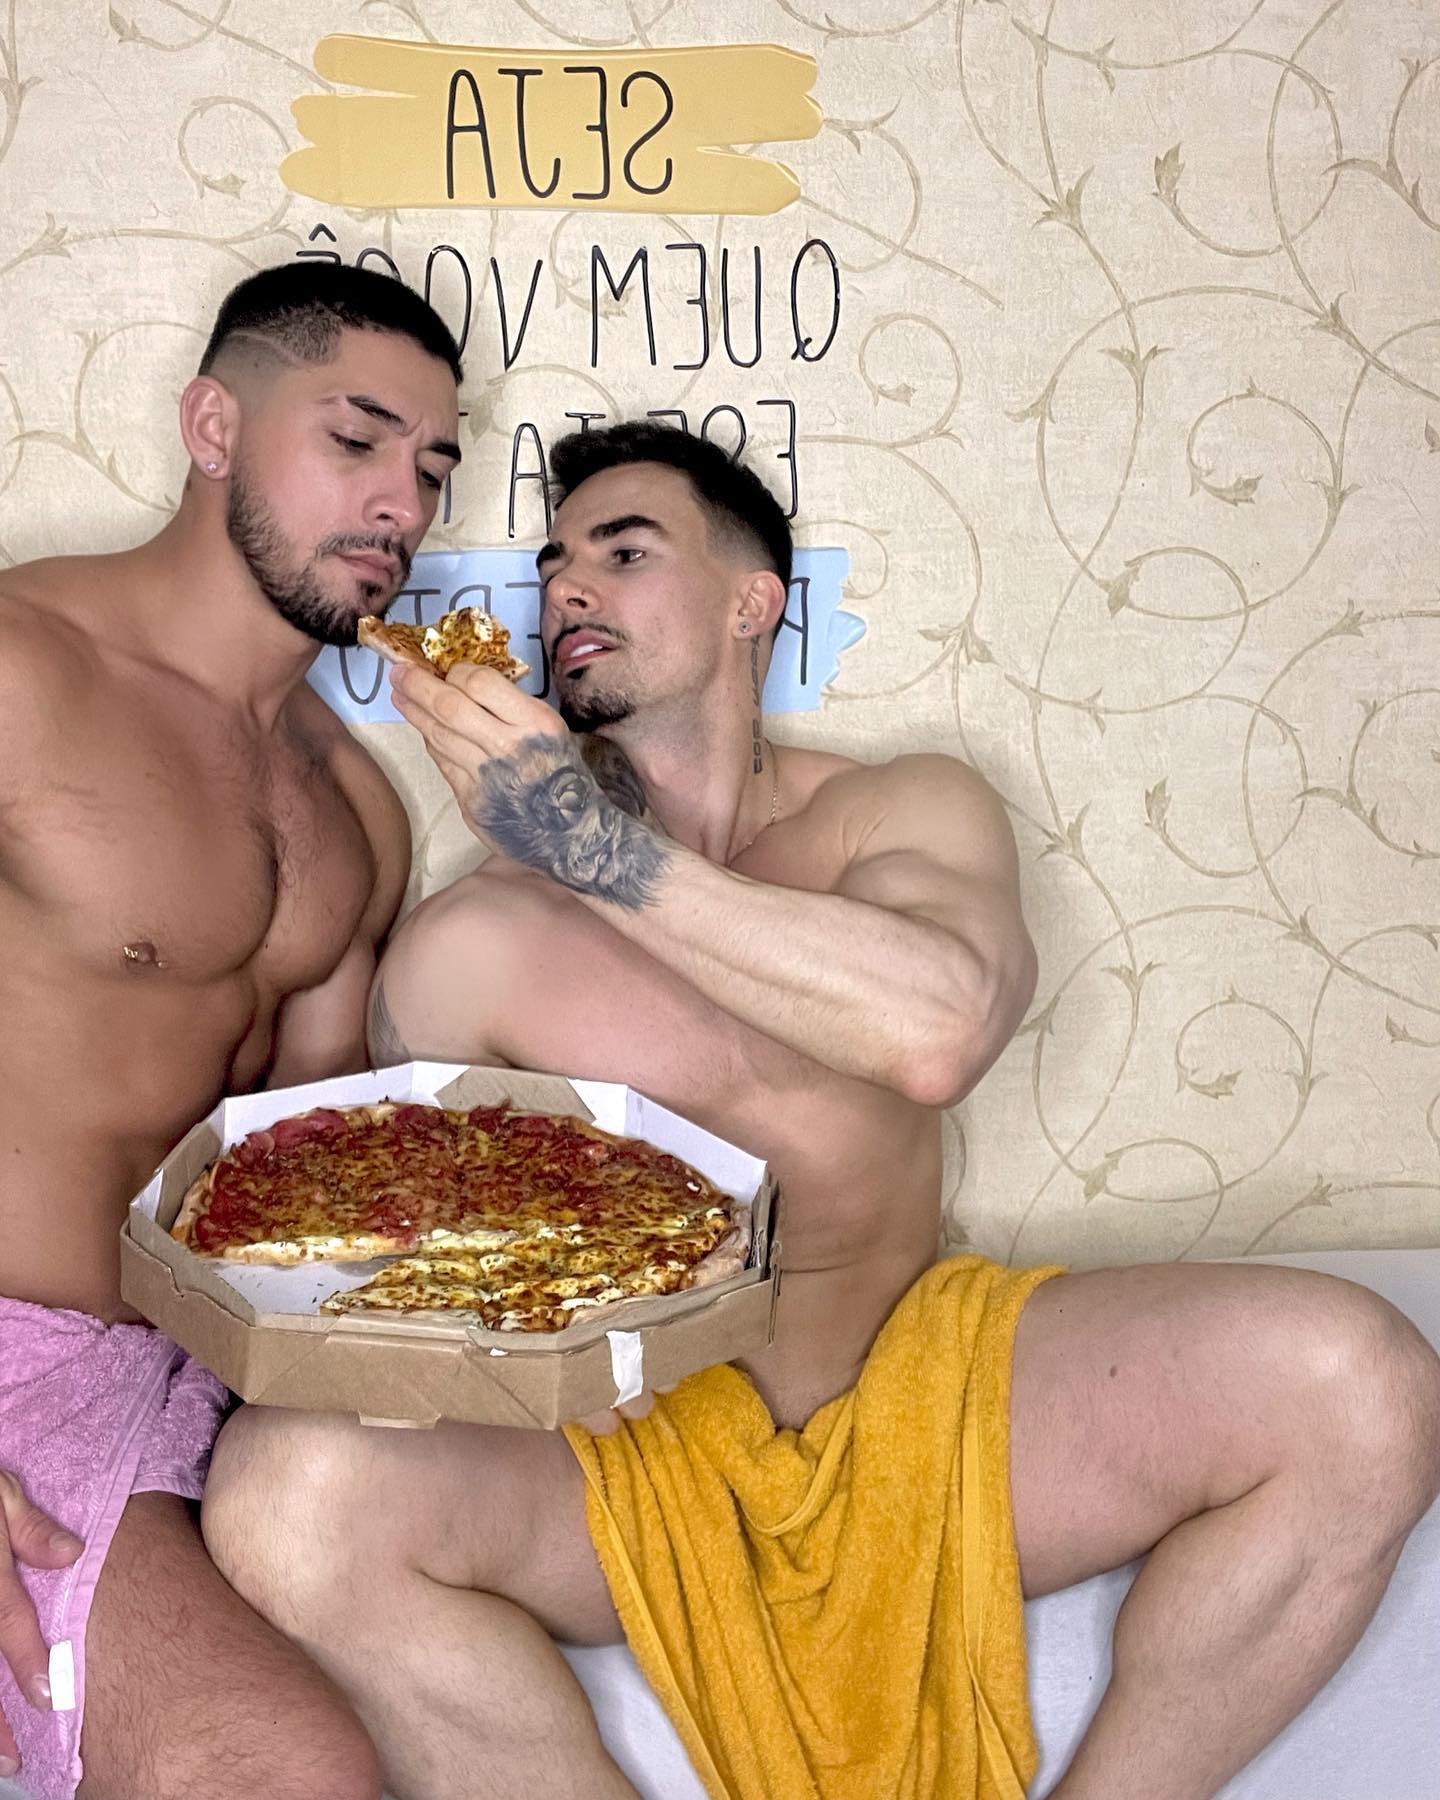 Te gusta que te den en la boquita ? La pizza 🍕 si es que me entiendes 😏
@bobjowbobb #of #linknabio 
•
•
•
•
•
•
•
#style #styleblogger #moment #viral #music #muscle #heart #video #only #loveislove #pride #lgbt #gay #man